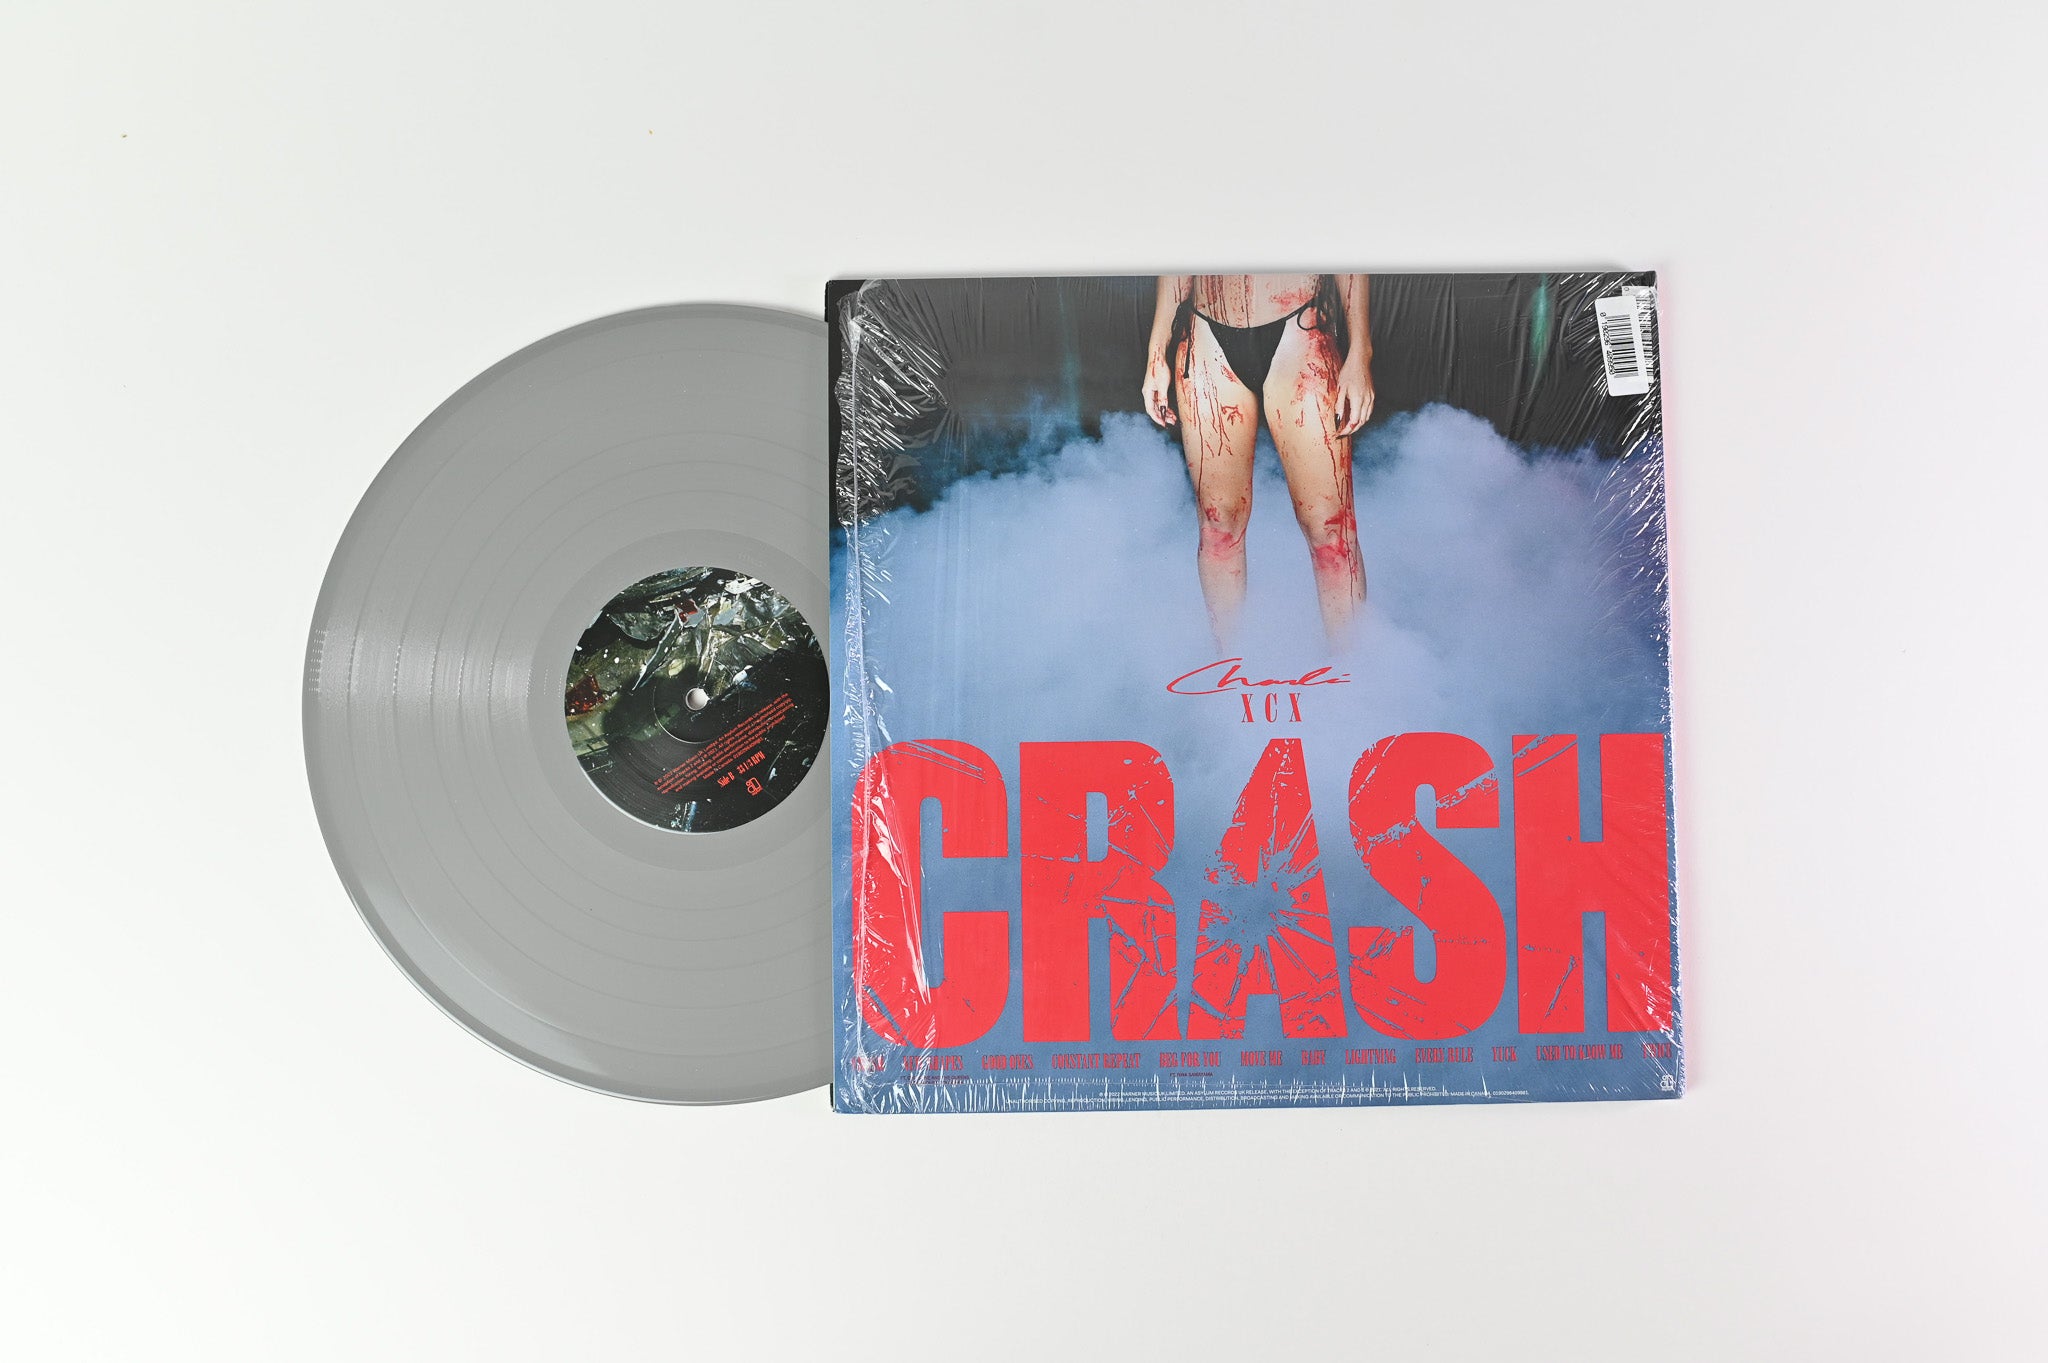 Charli XCX - Crash on Asylum Grey Vinyl